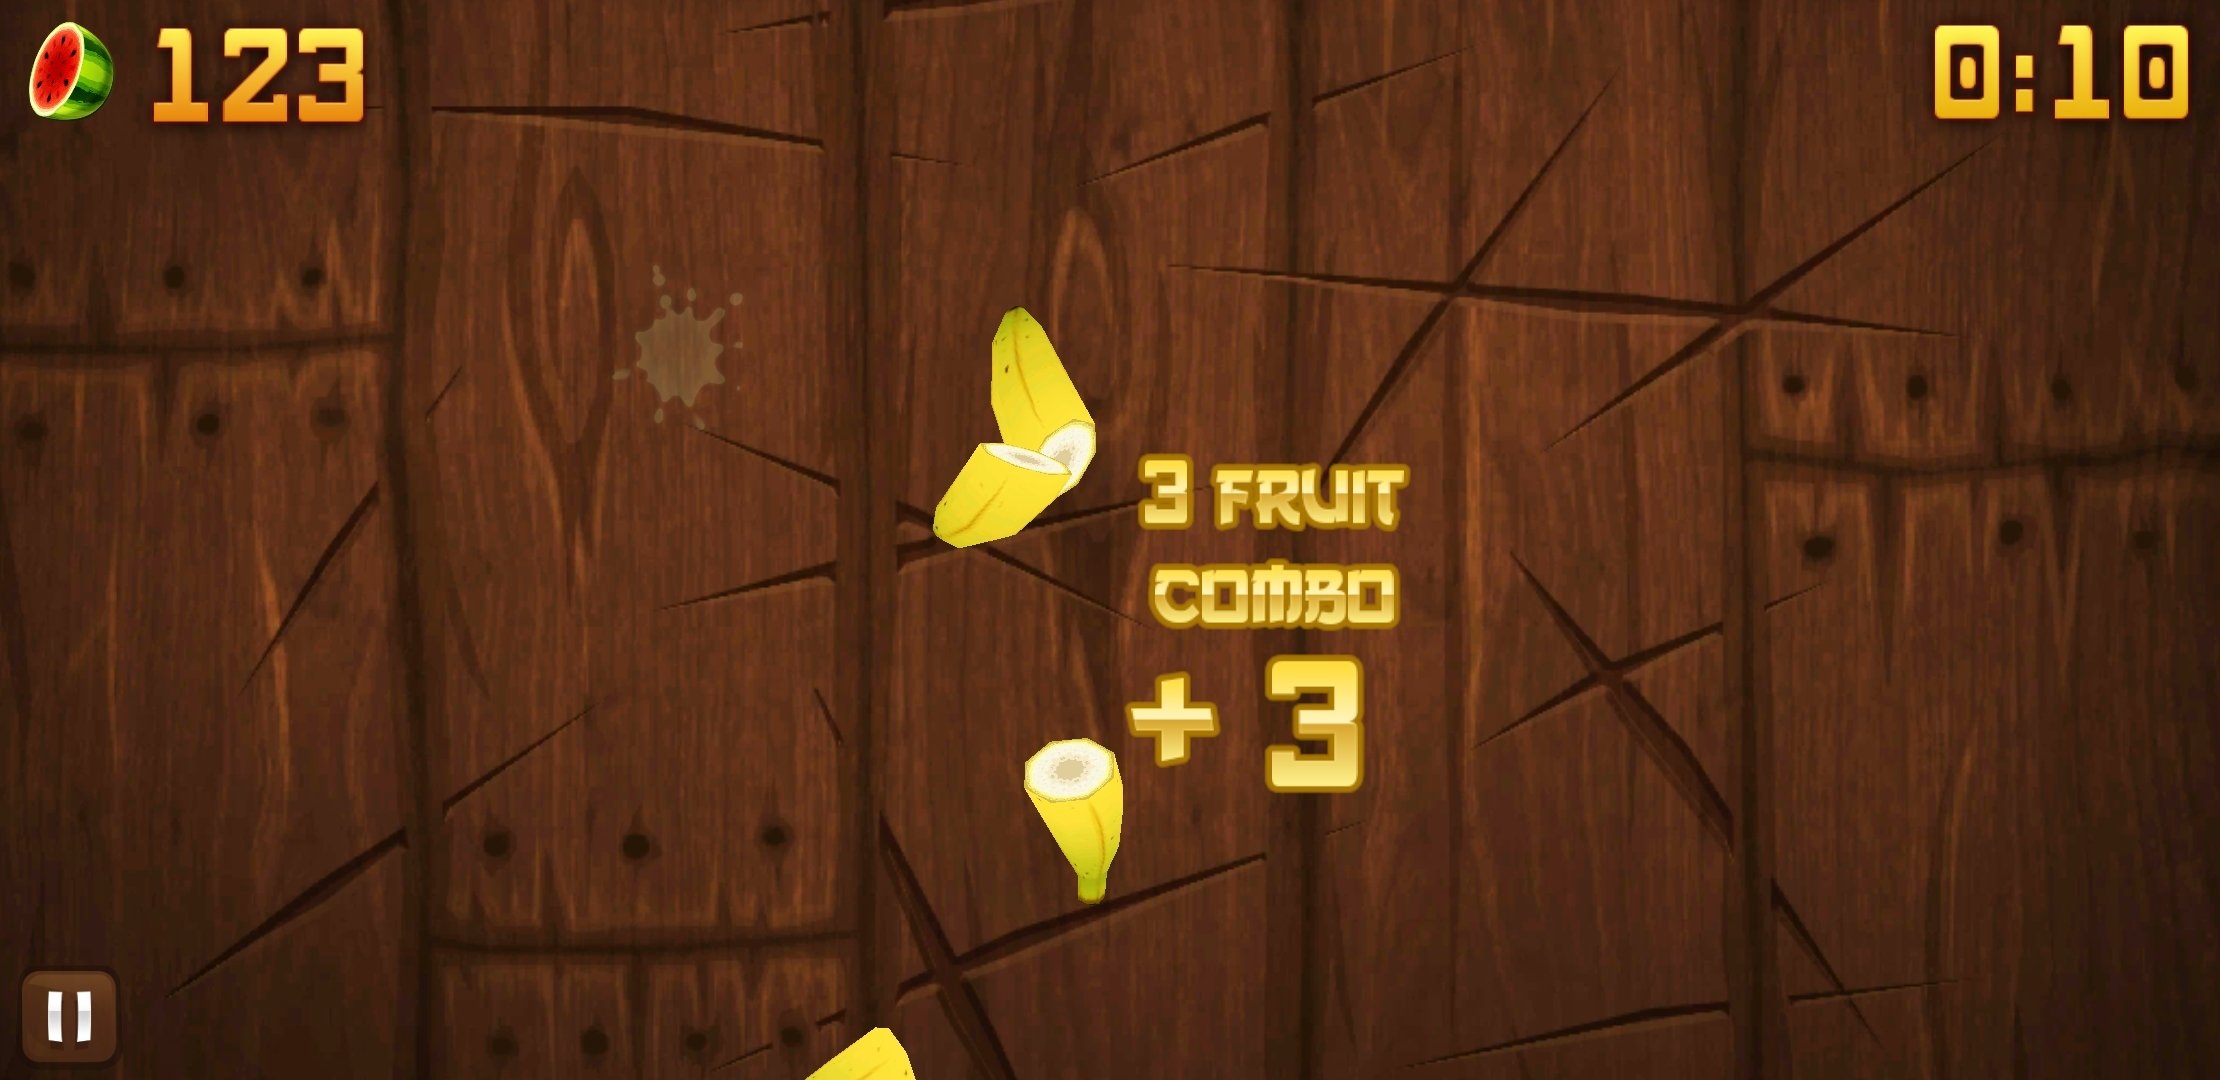 Fruit Ninja 3.48 - Download for PC Free